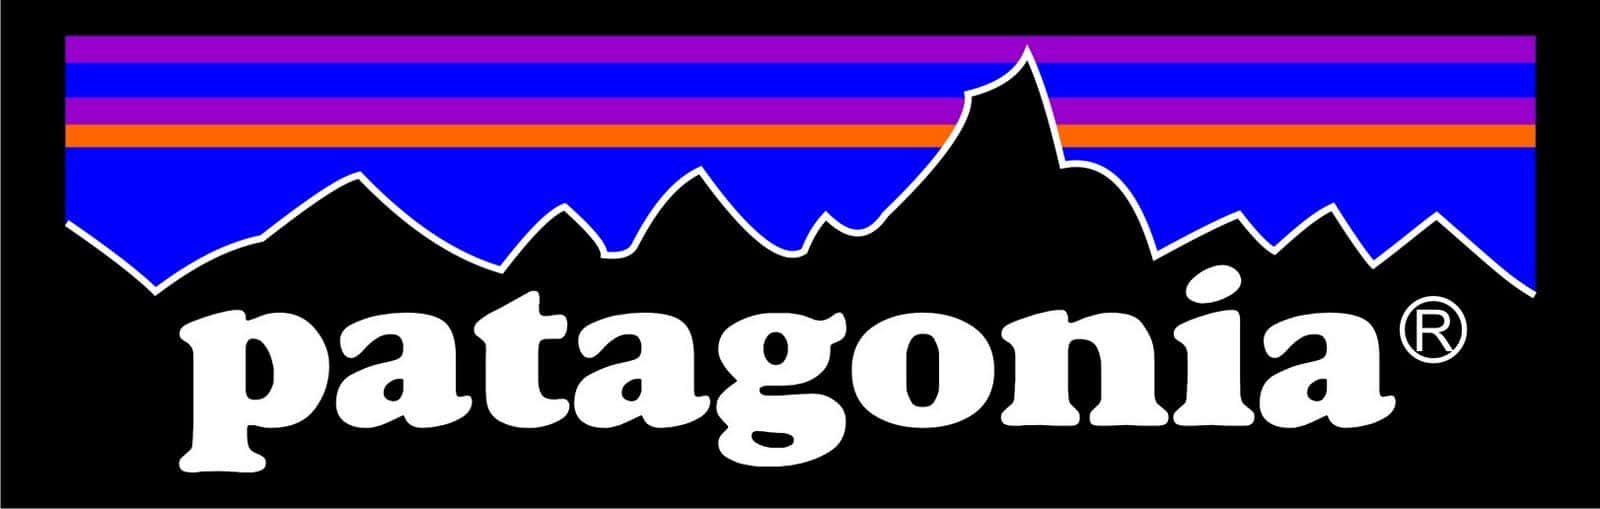 Sfondocon Logo Di Patagonia